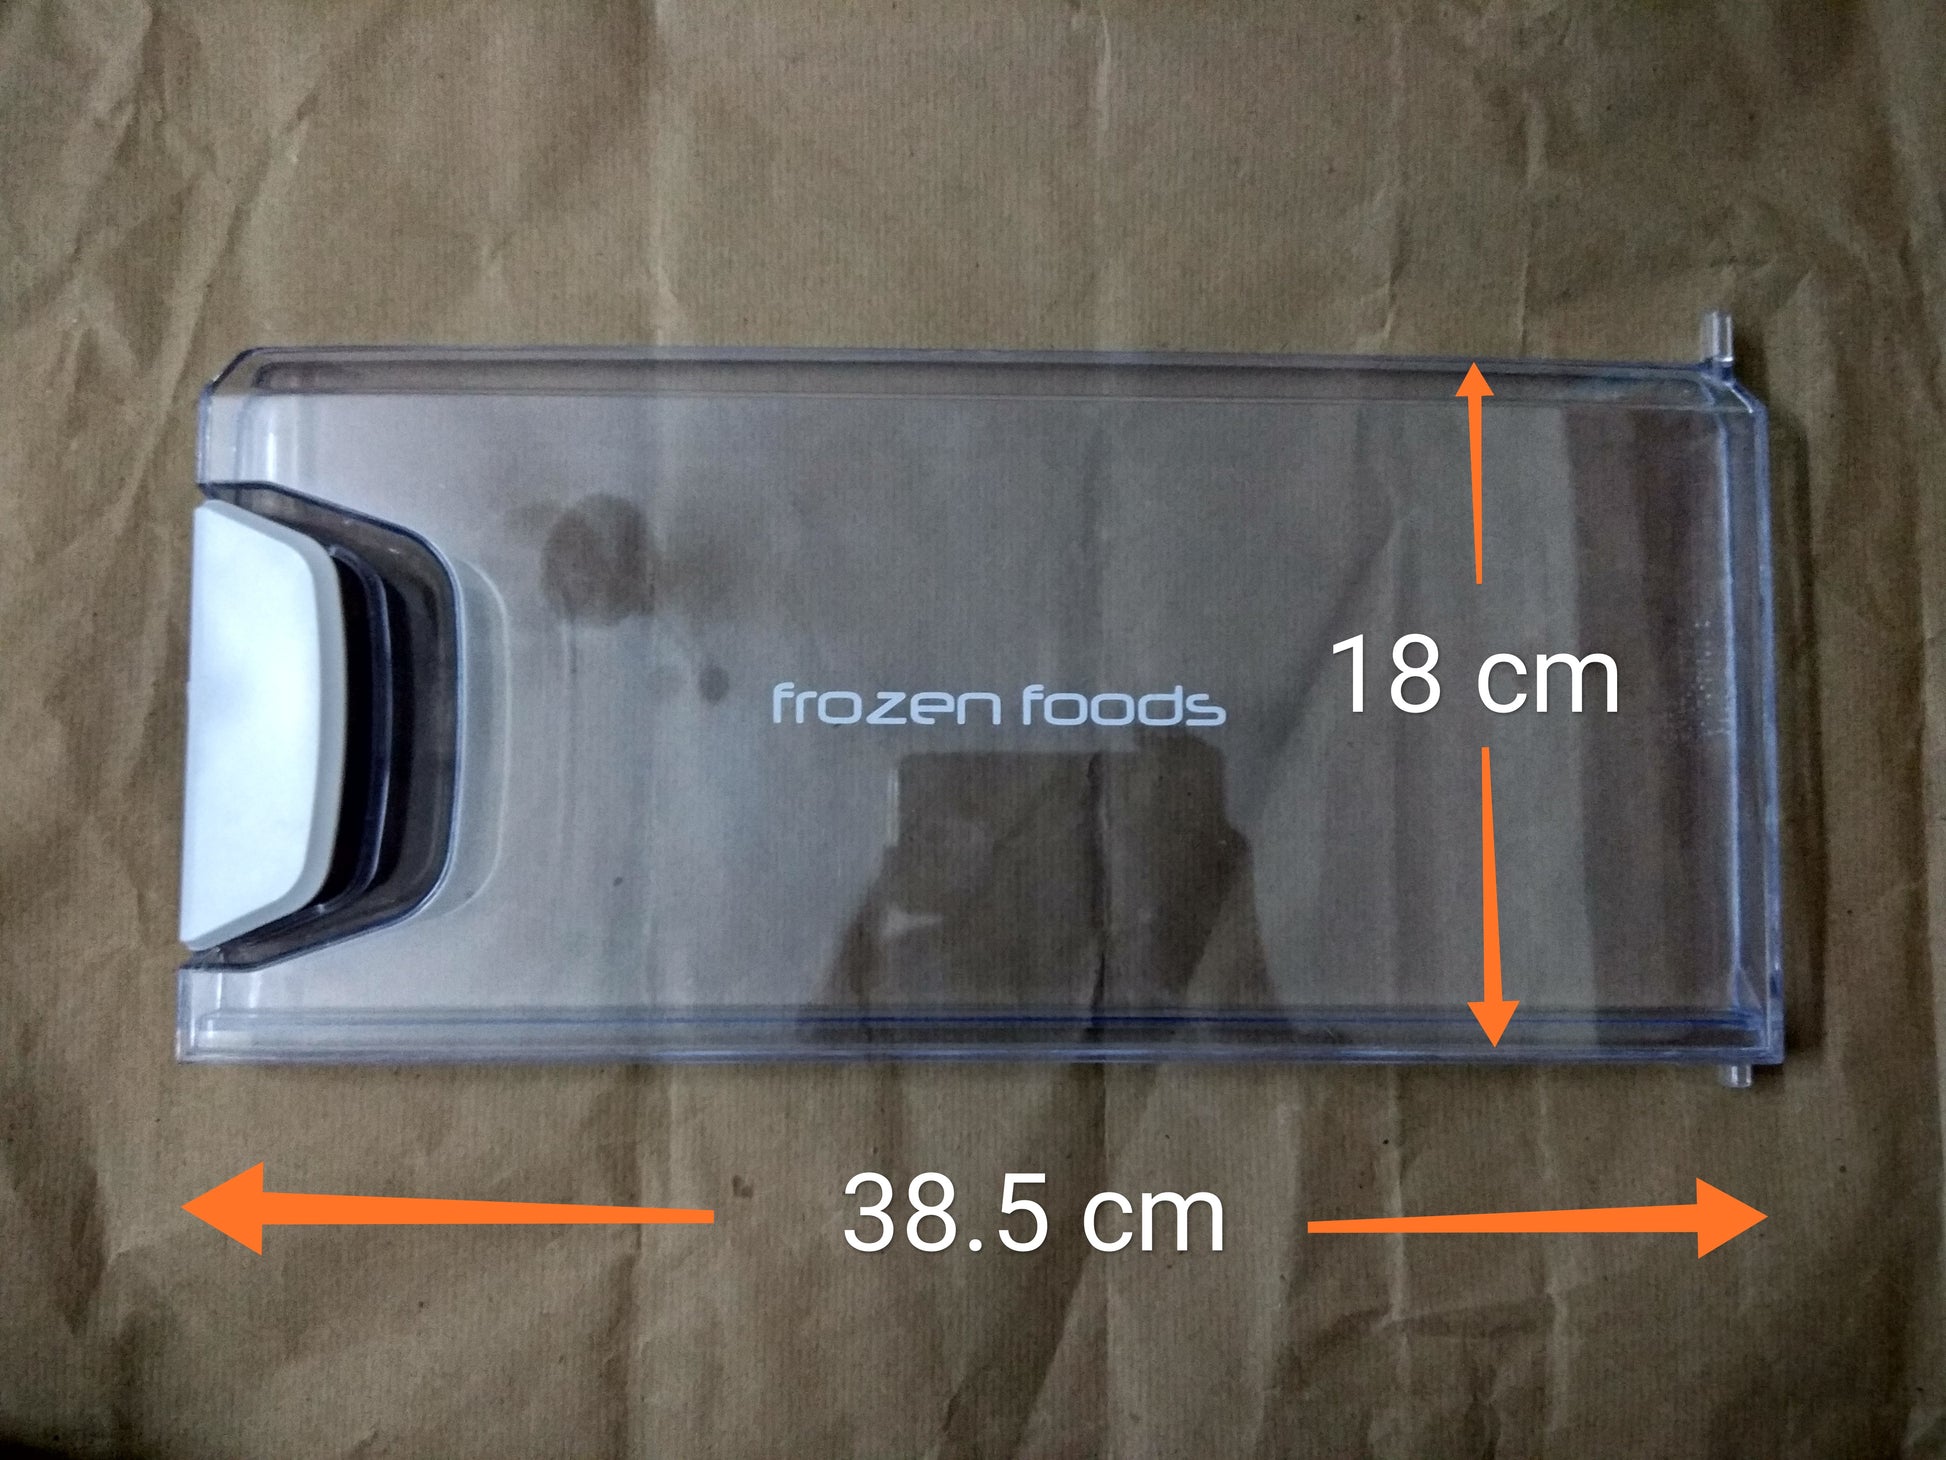 Freezer door for godrej edge pro 190 litres refrigerator (White Handle) Length 38.5 CM Breath 18 CM - Faritha